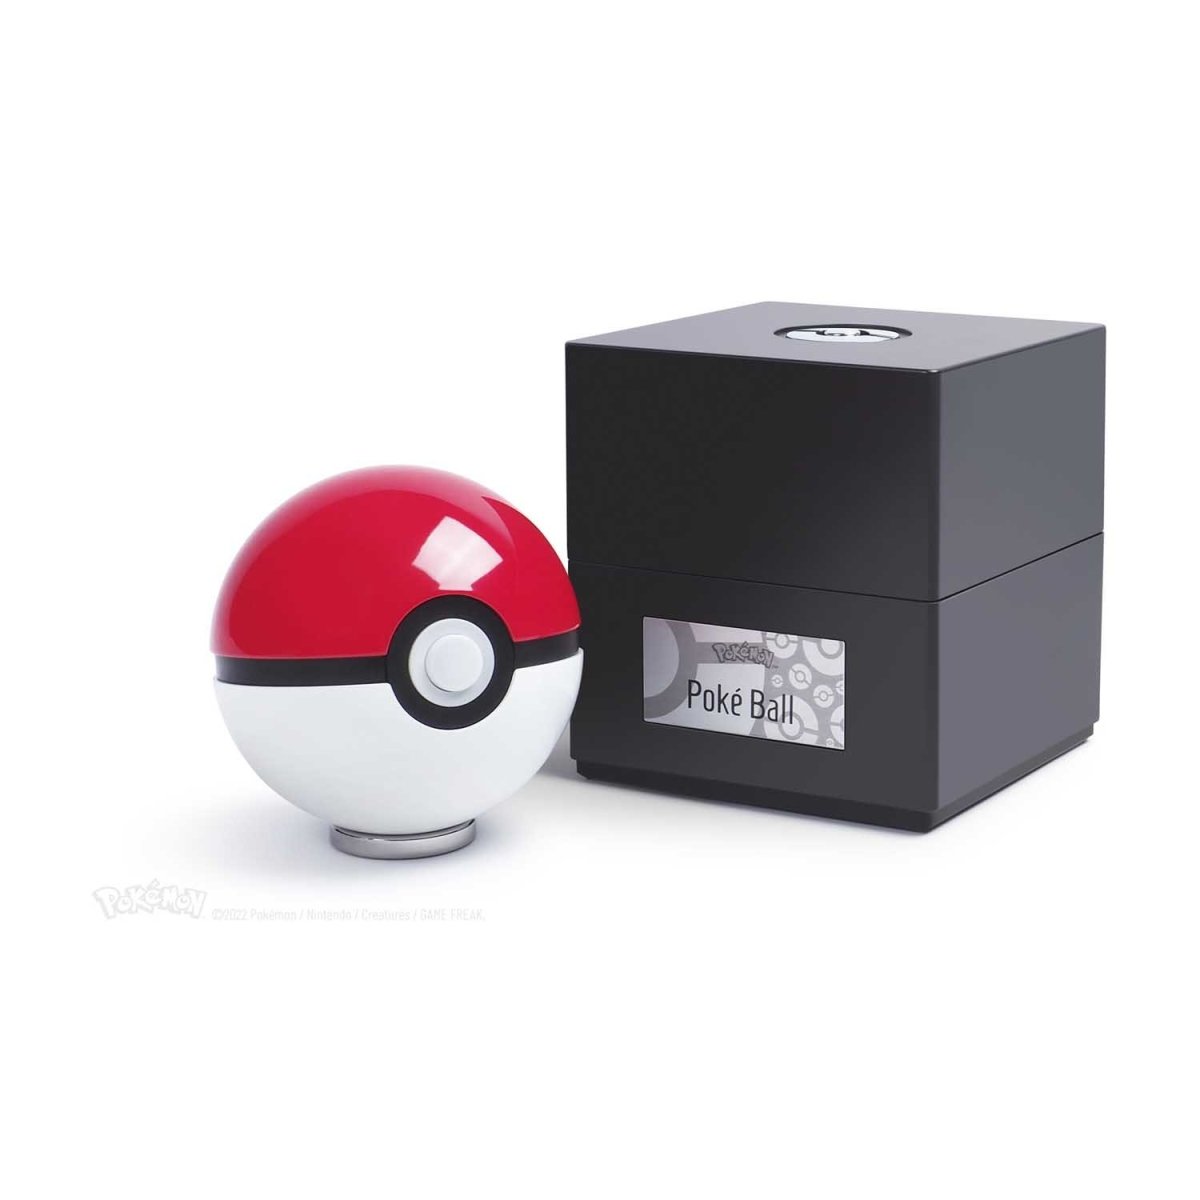 Poké Ball by The Wand Company | Pokémon Center Official Site